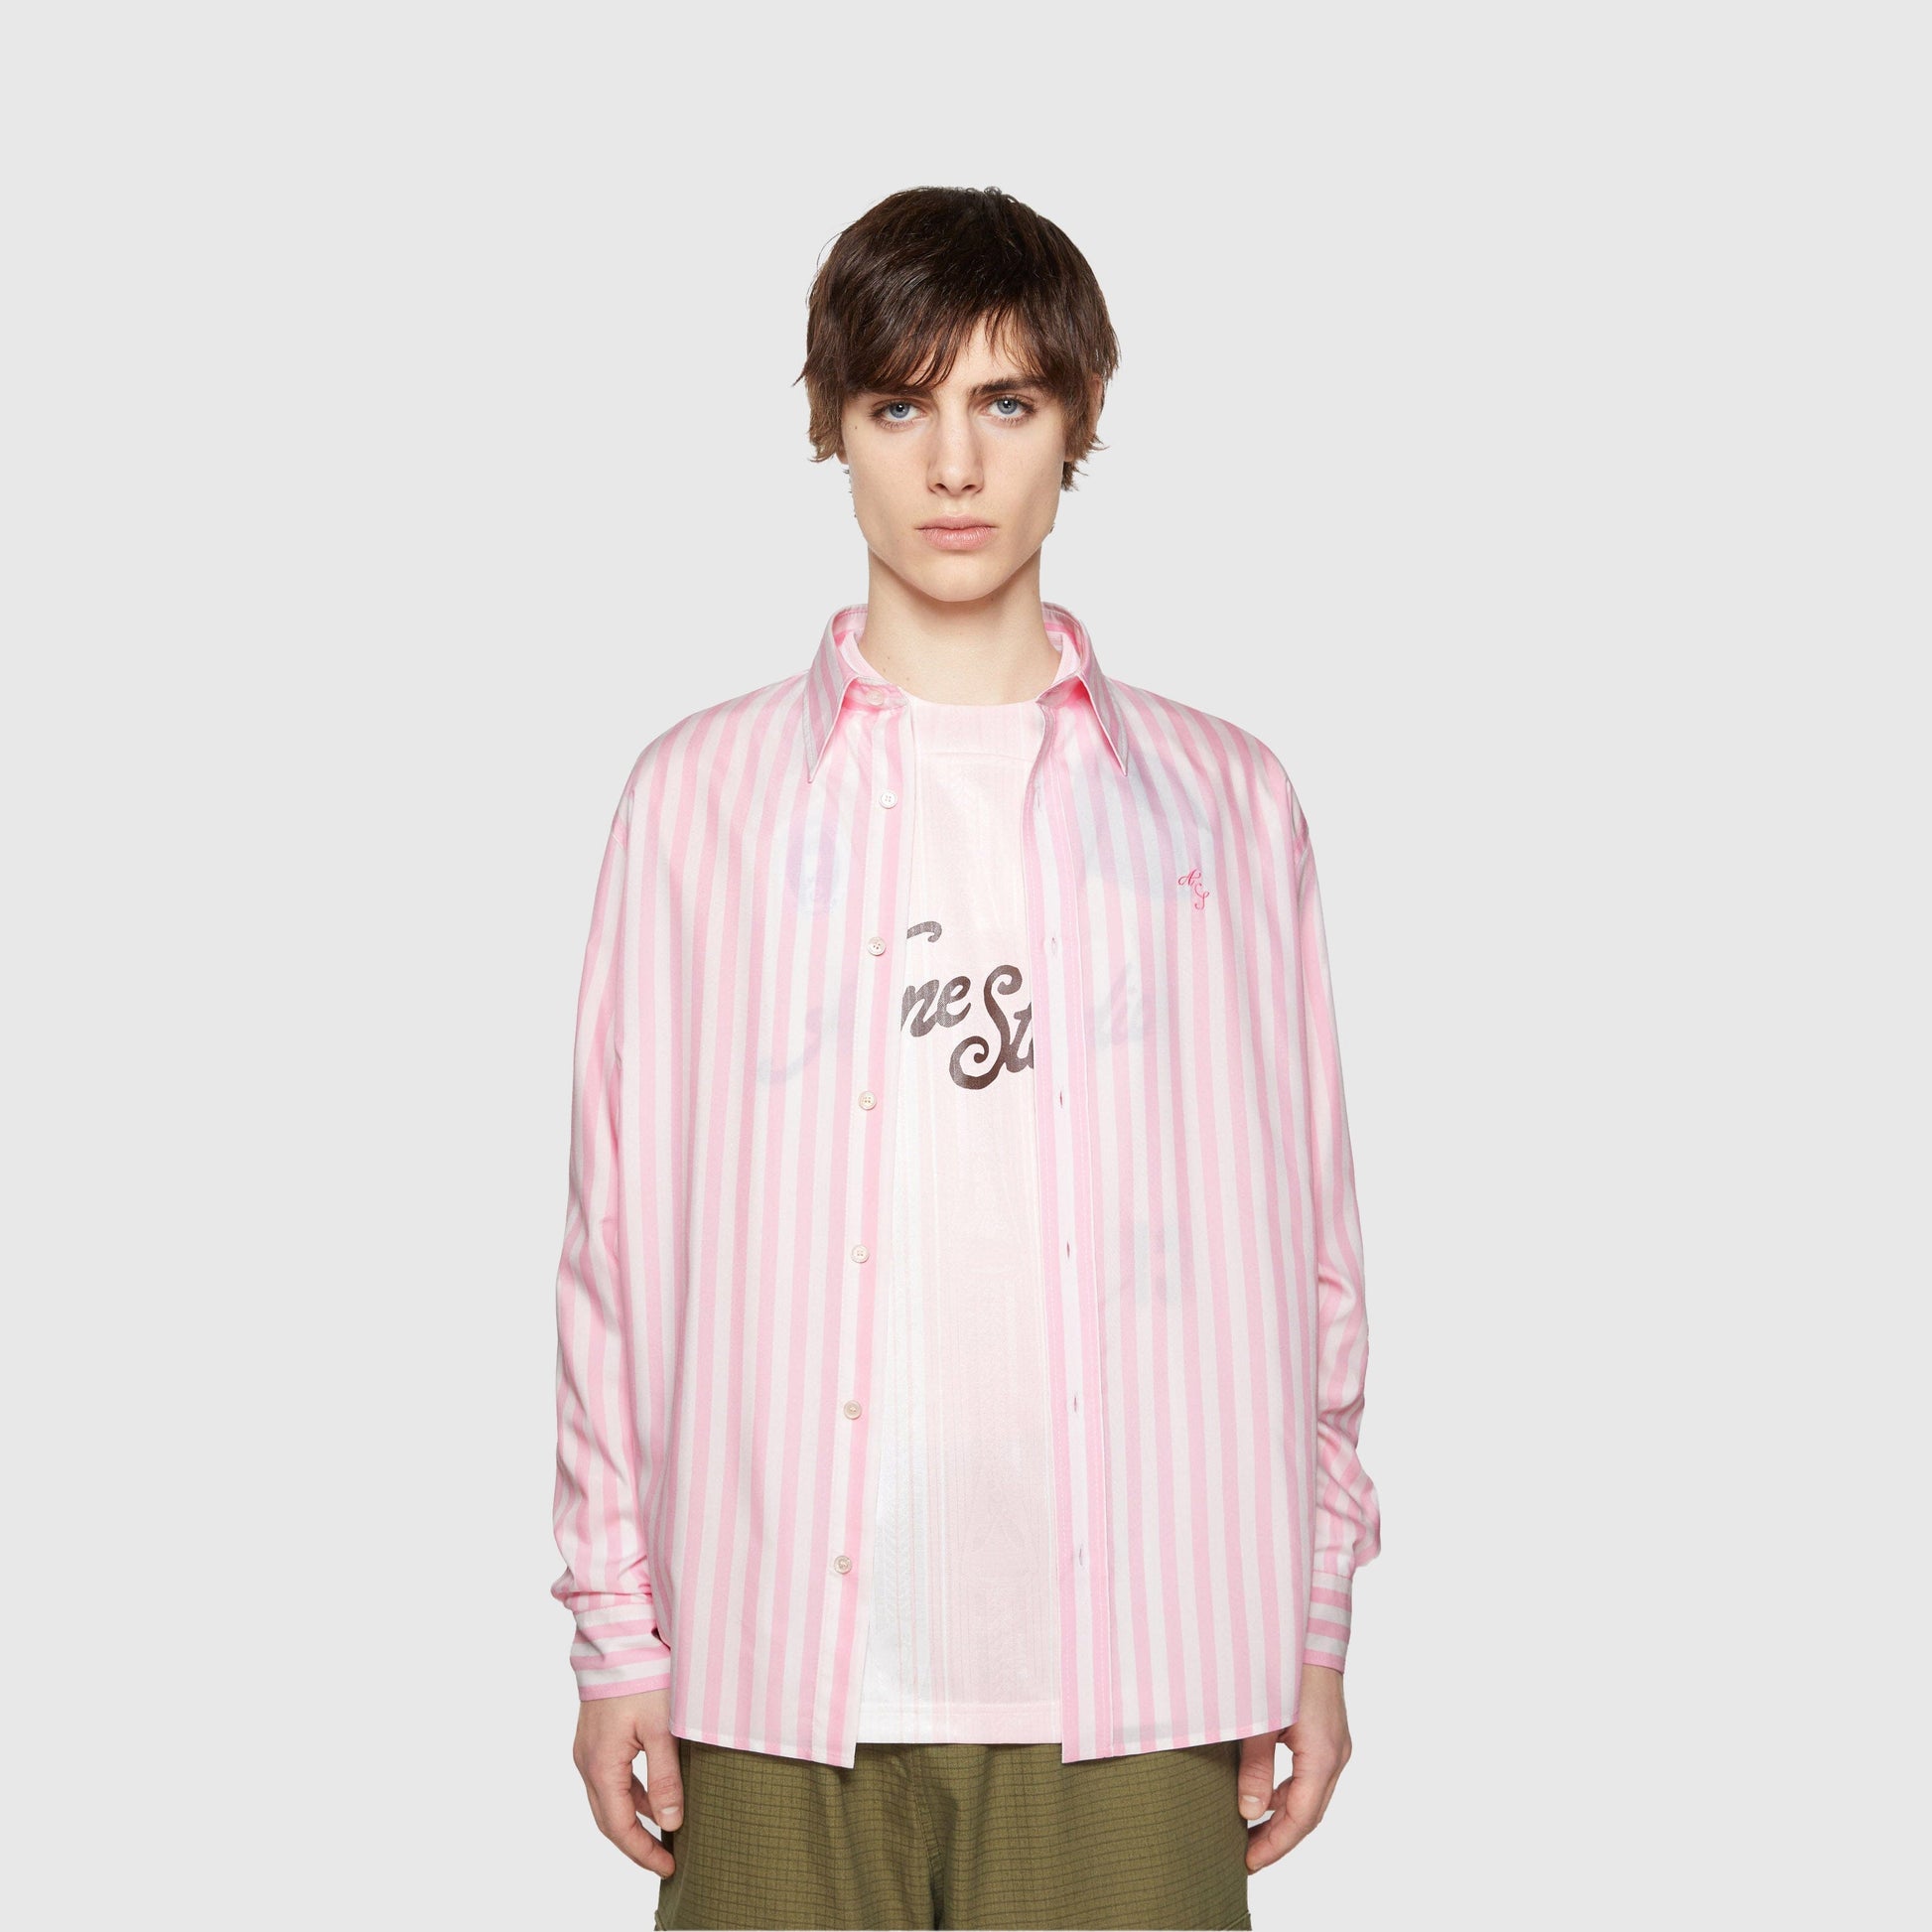 Acne Studios Shirt - Pink/White Shirt Acne Studios 